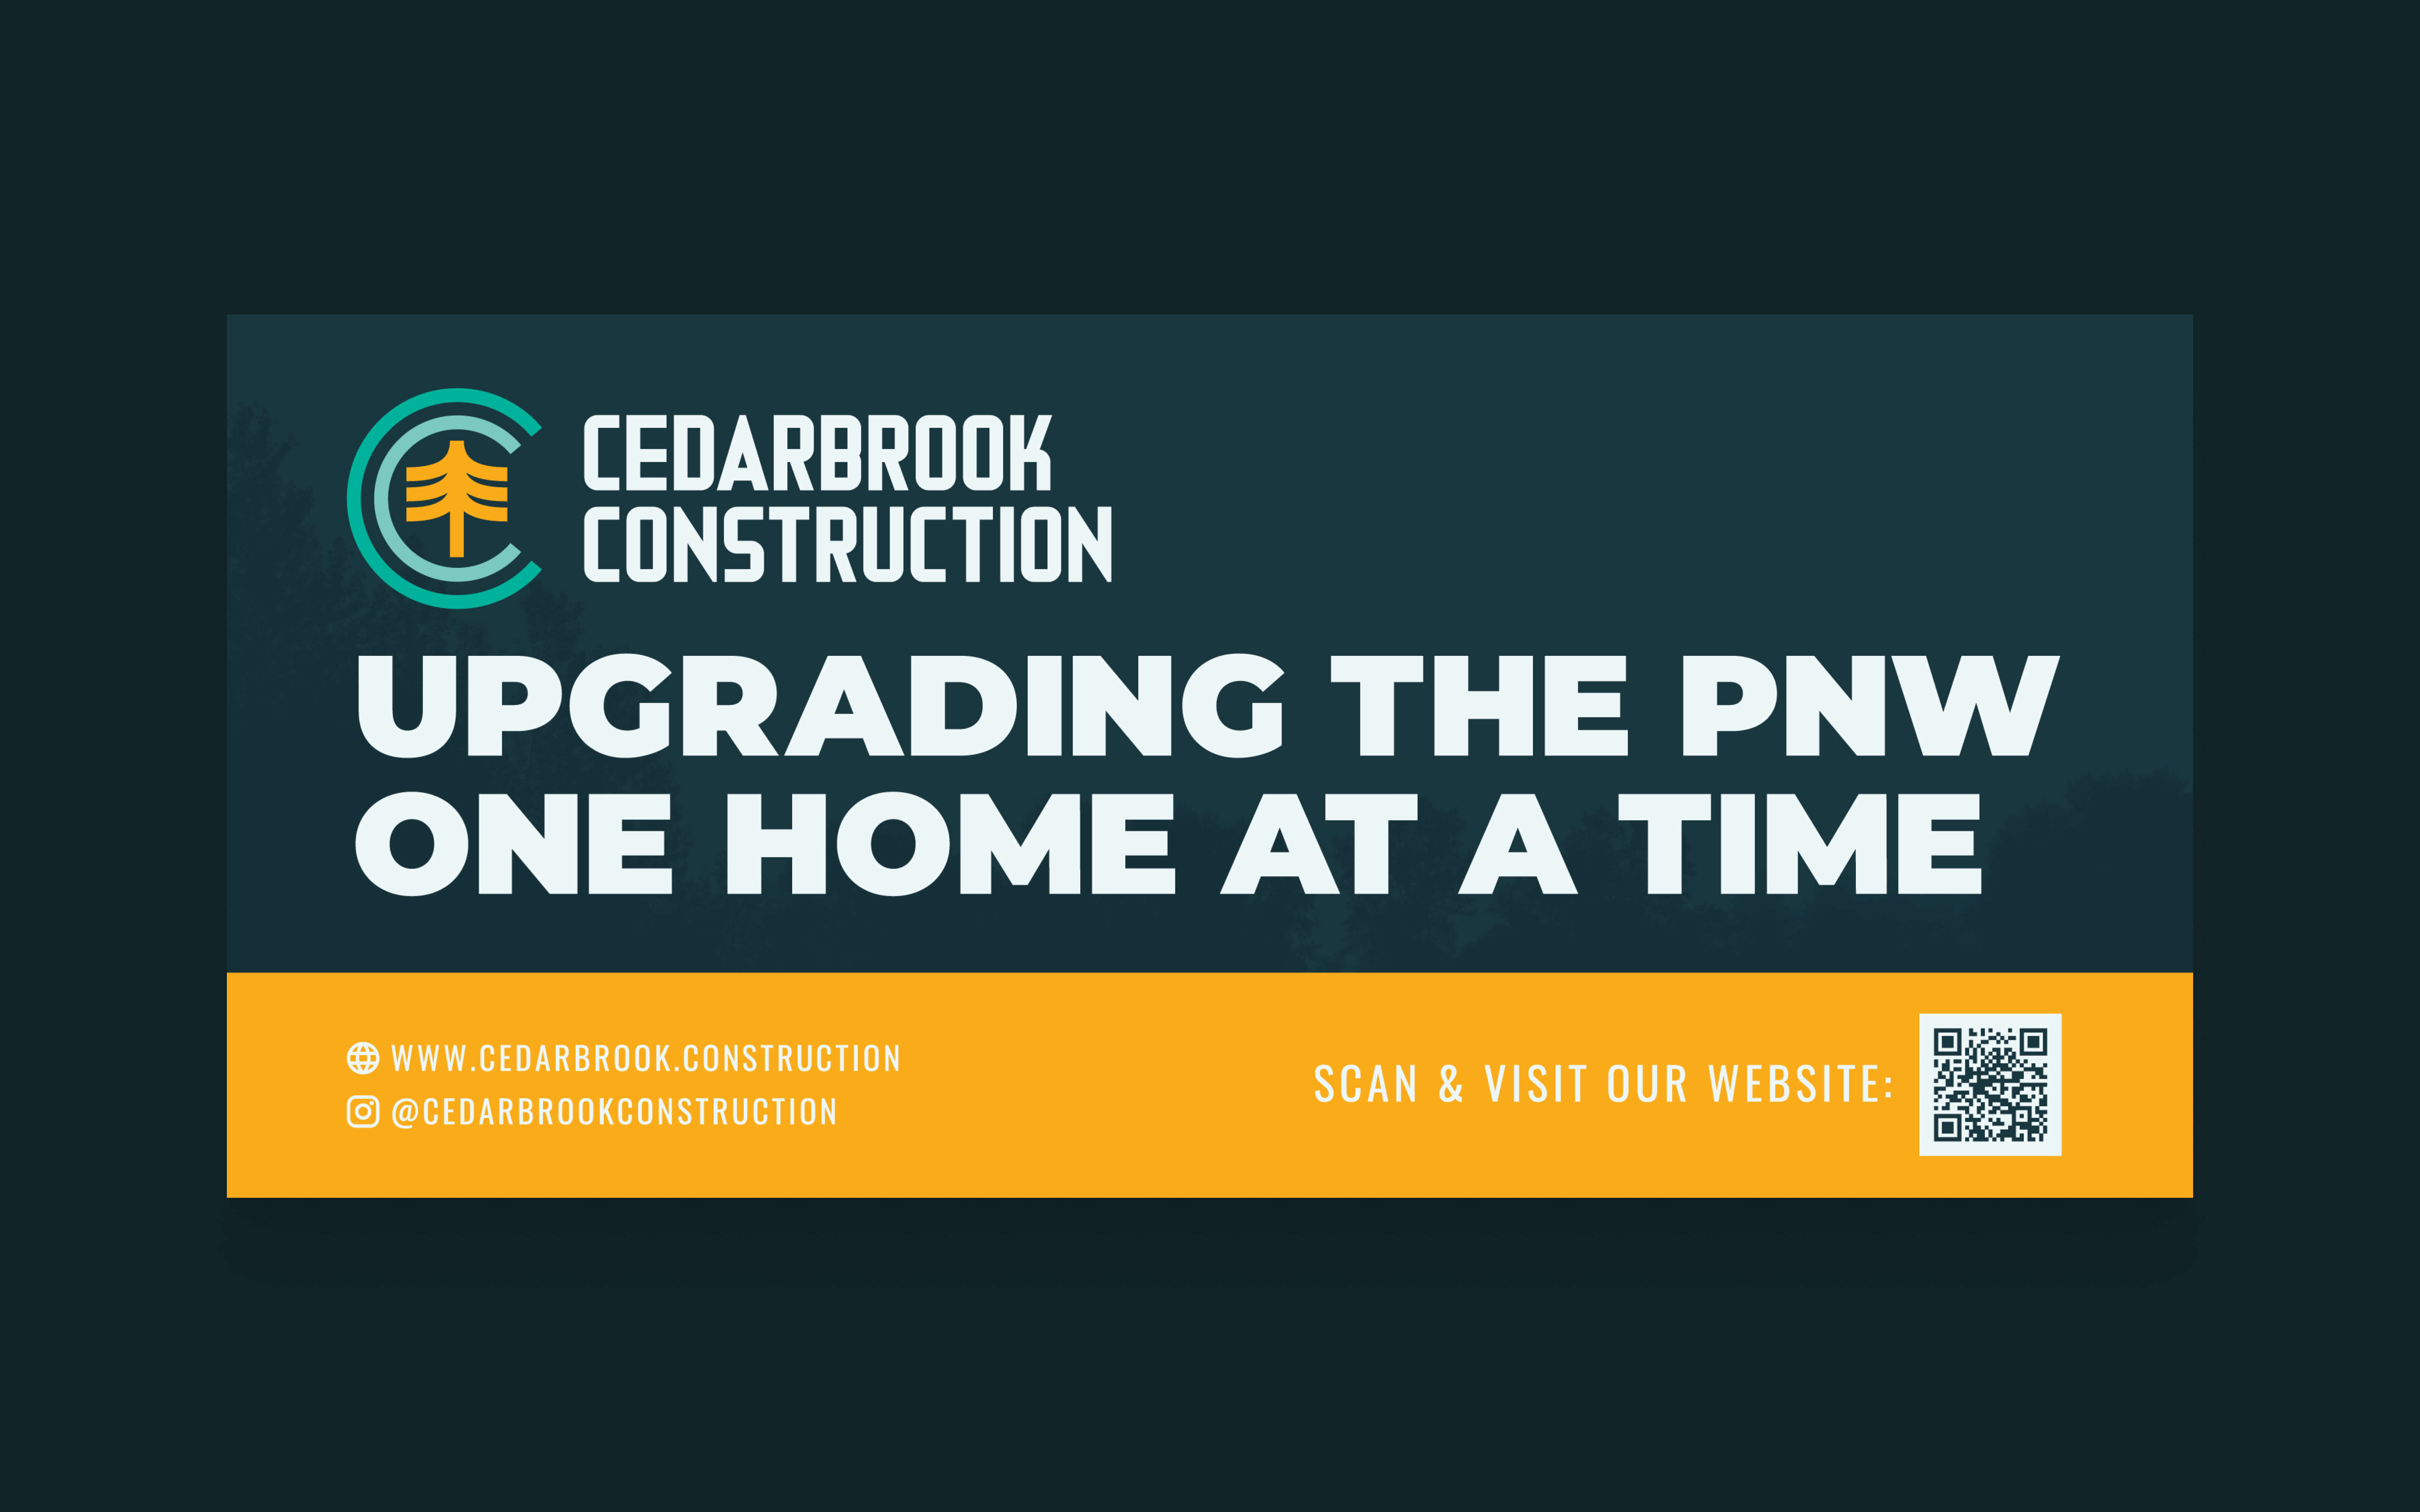 Cedarbrook Construction Ad